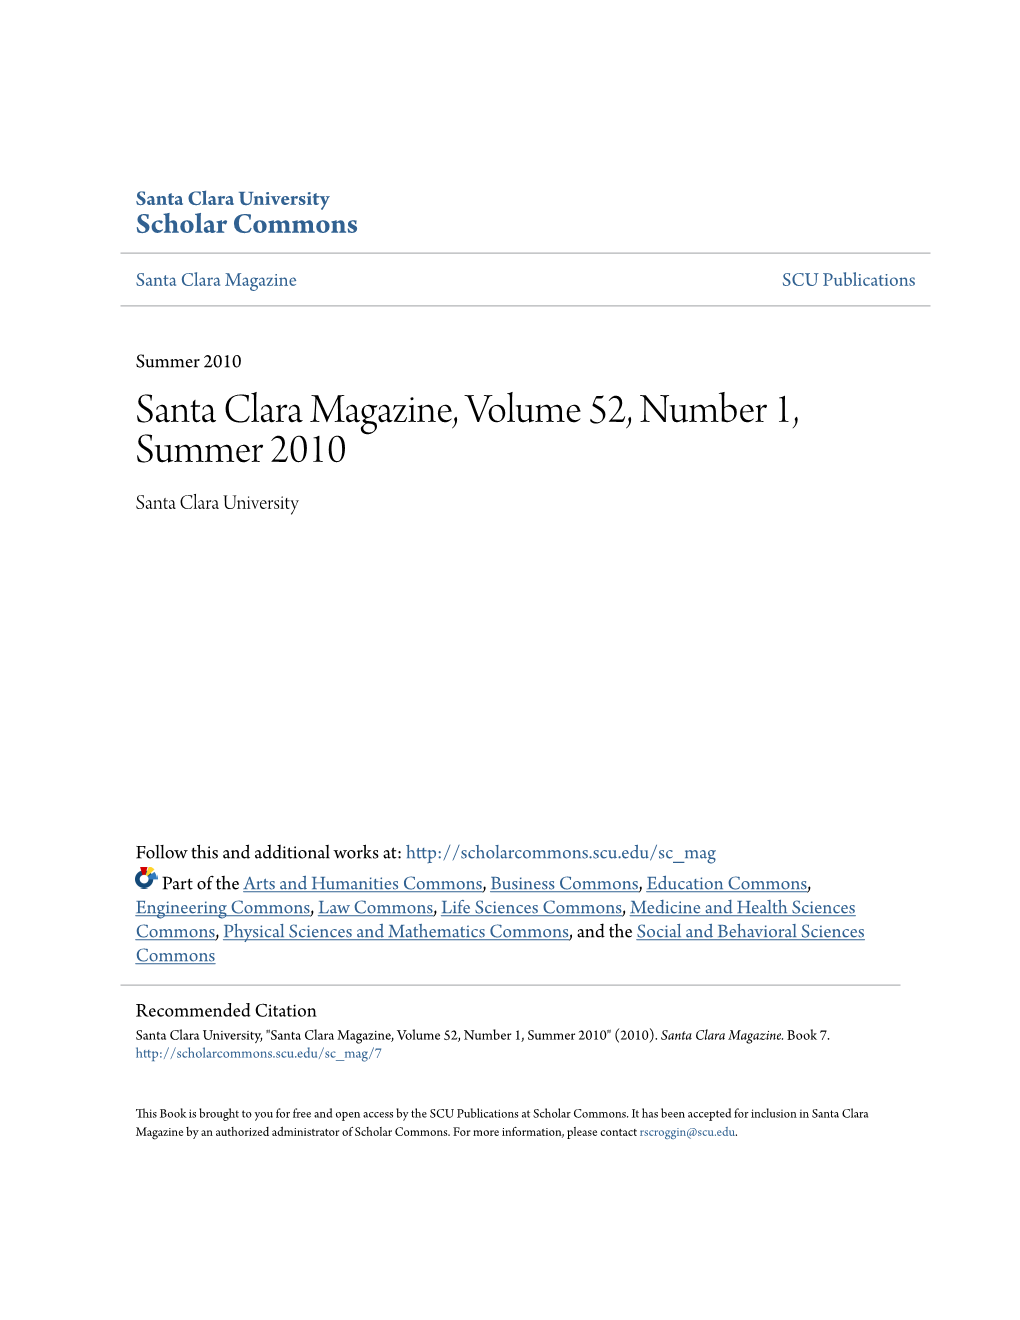 Santa Clara Magazine, Volume 52, Number 1, Summer 2010 Santa Clara University